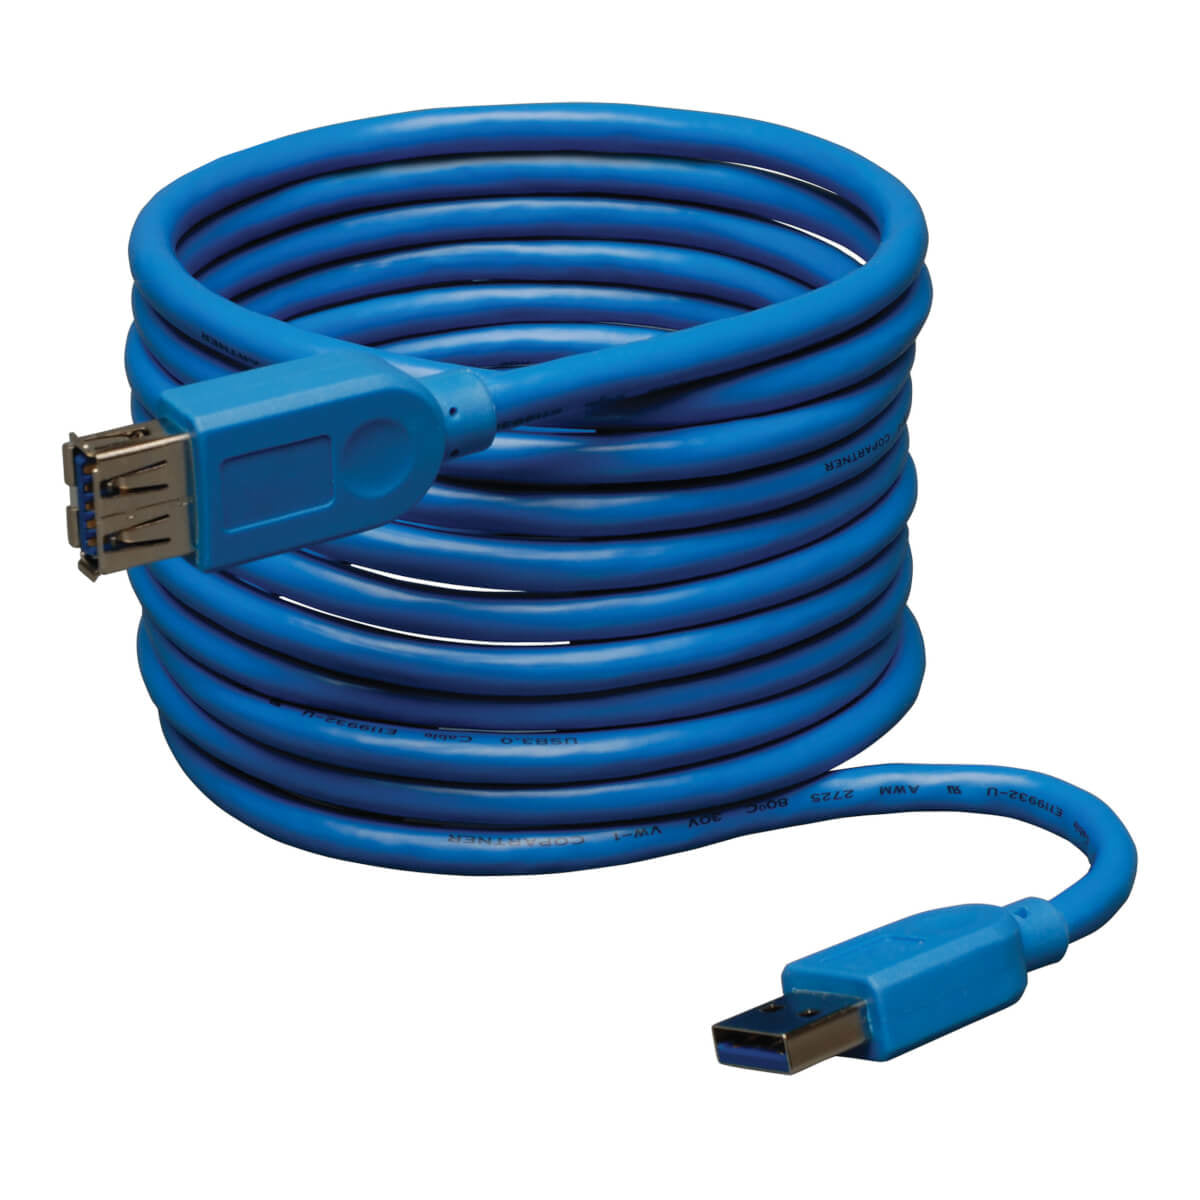 Cable de Extensión Tripp Lite U324-010, USB A 3.0 Macho - USB A Hembra, 3.05 Metros, Azul